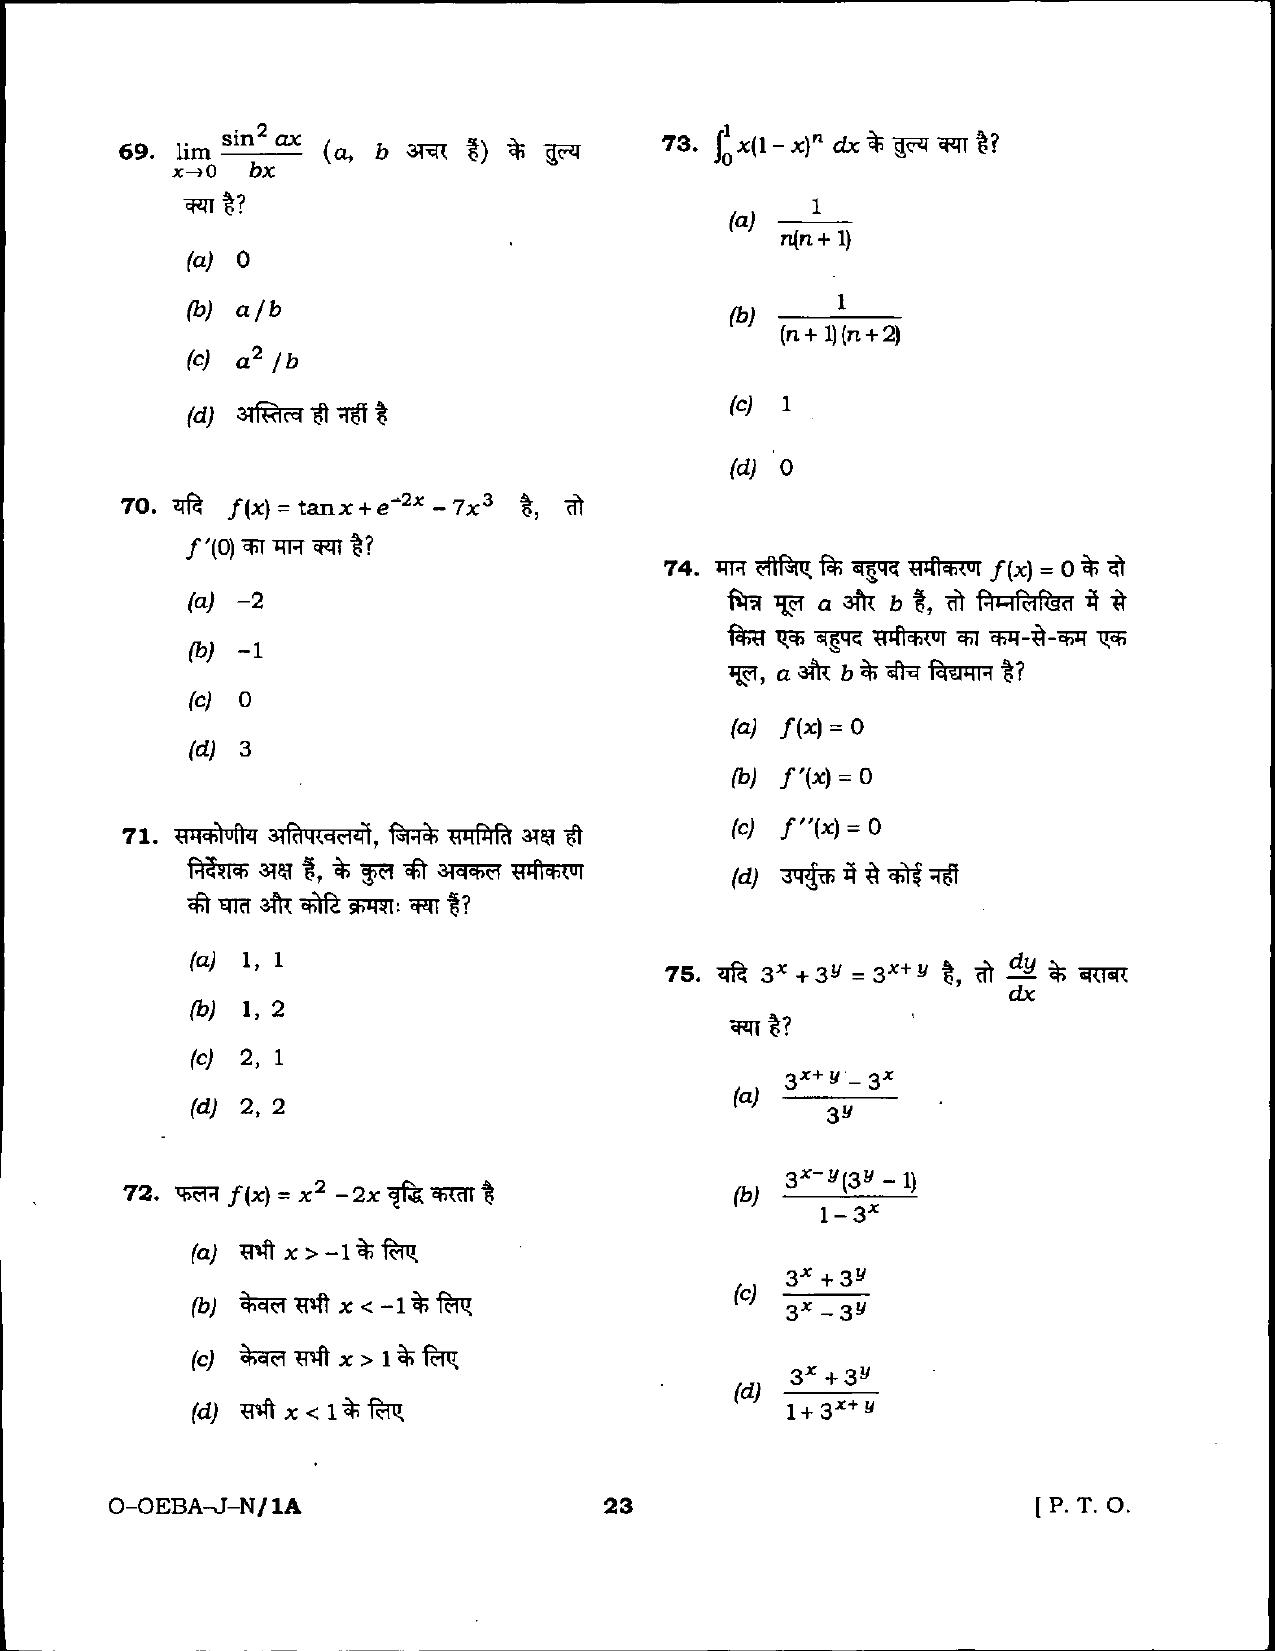 Odisha Junior Clerk Question Paper - General Mathematics - Page 23